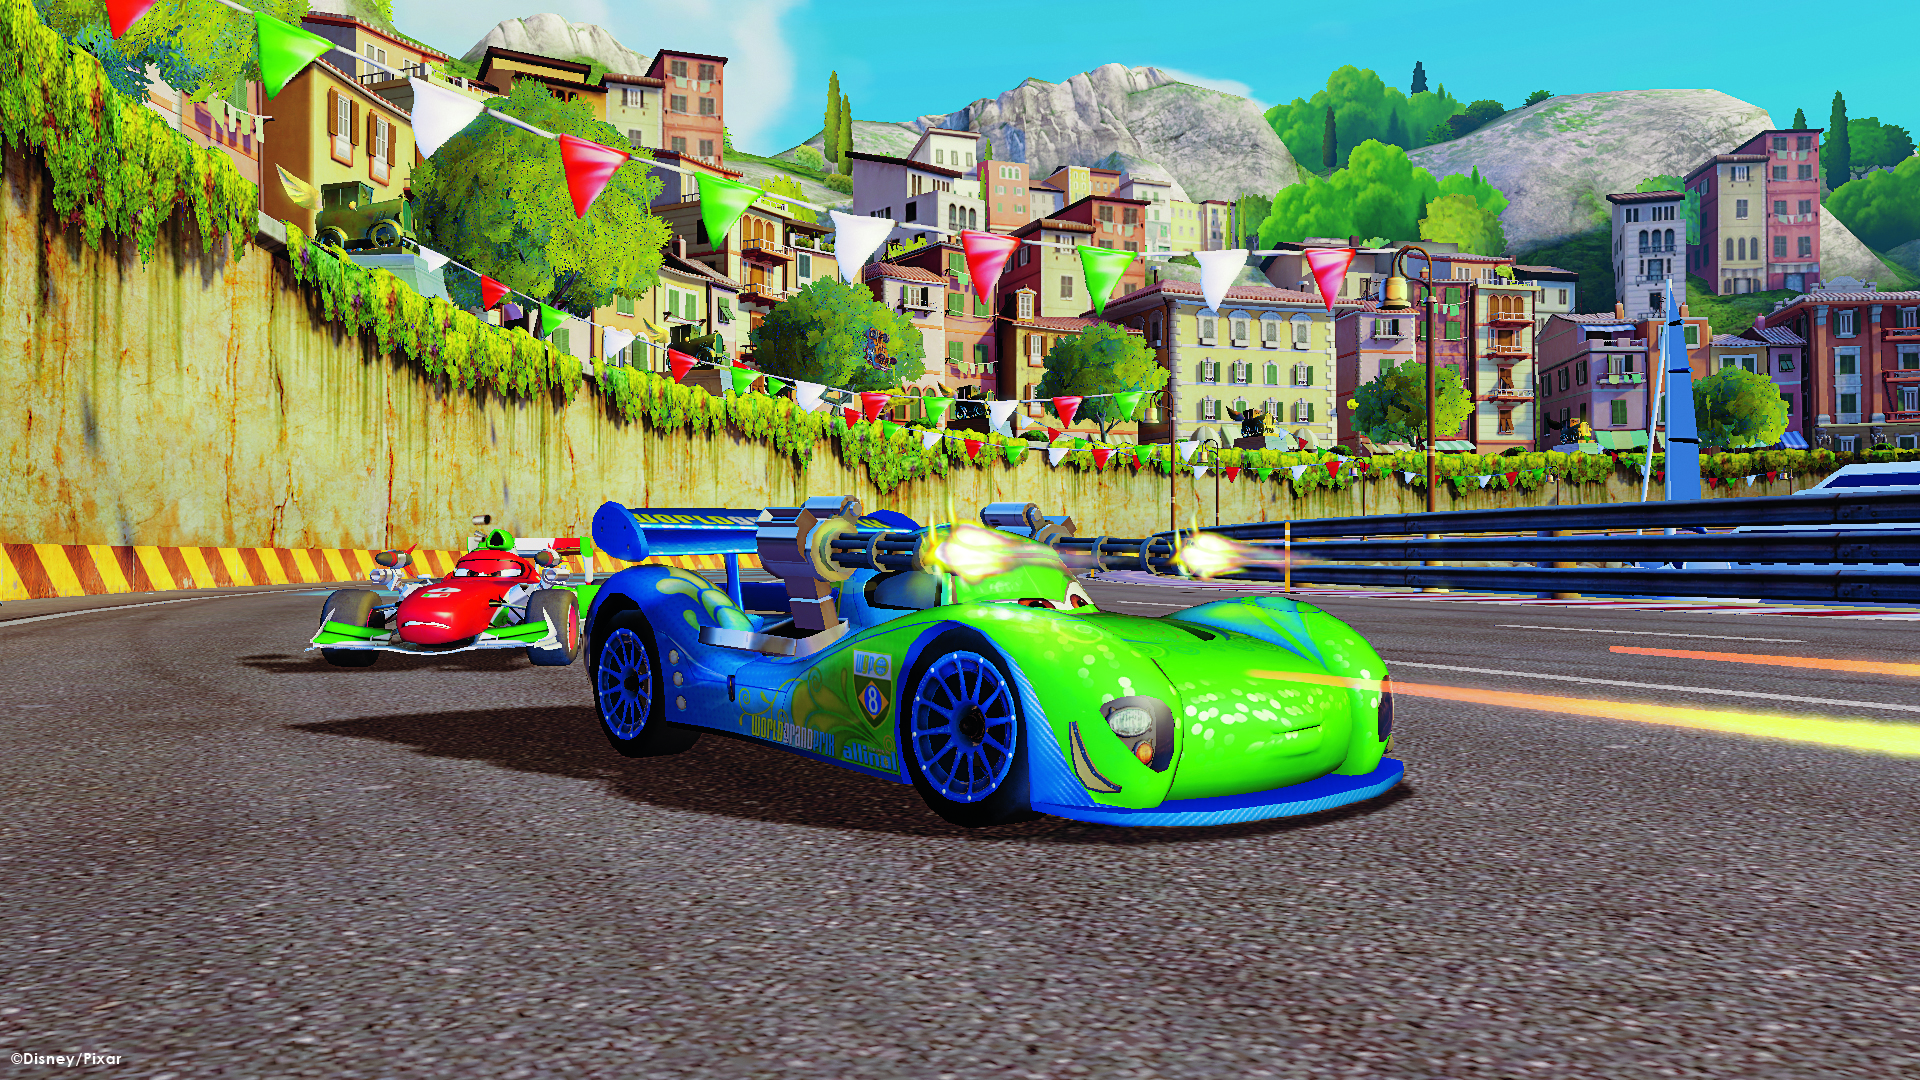 DisneyPixar Cars 2 The Video Game Resimleri 